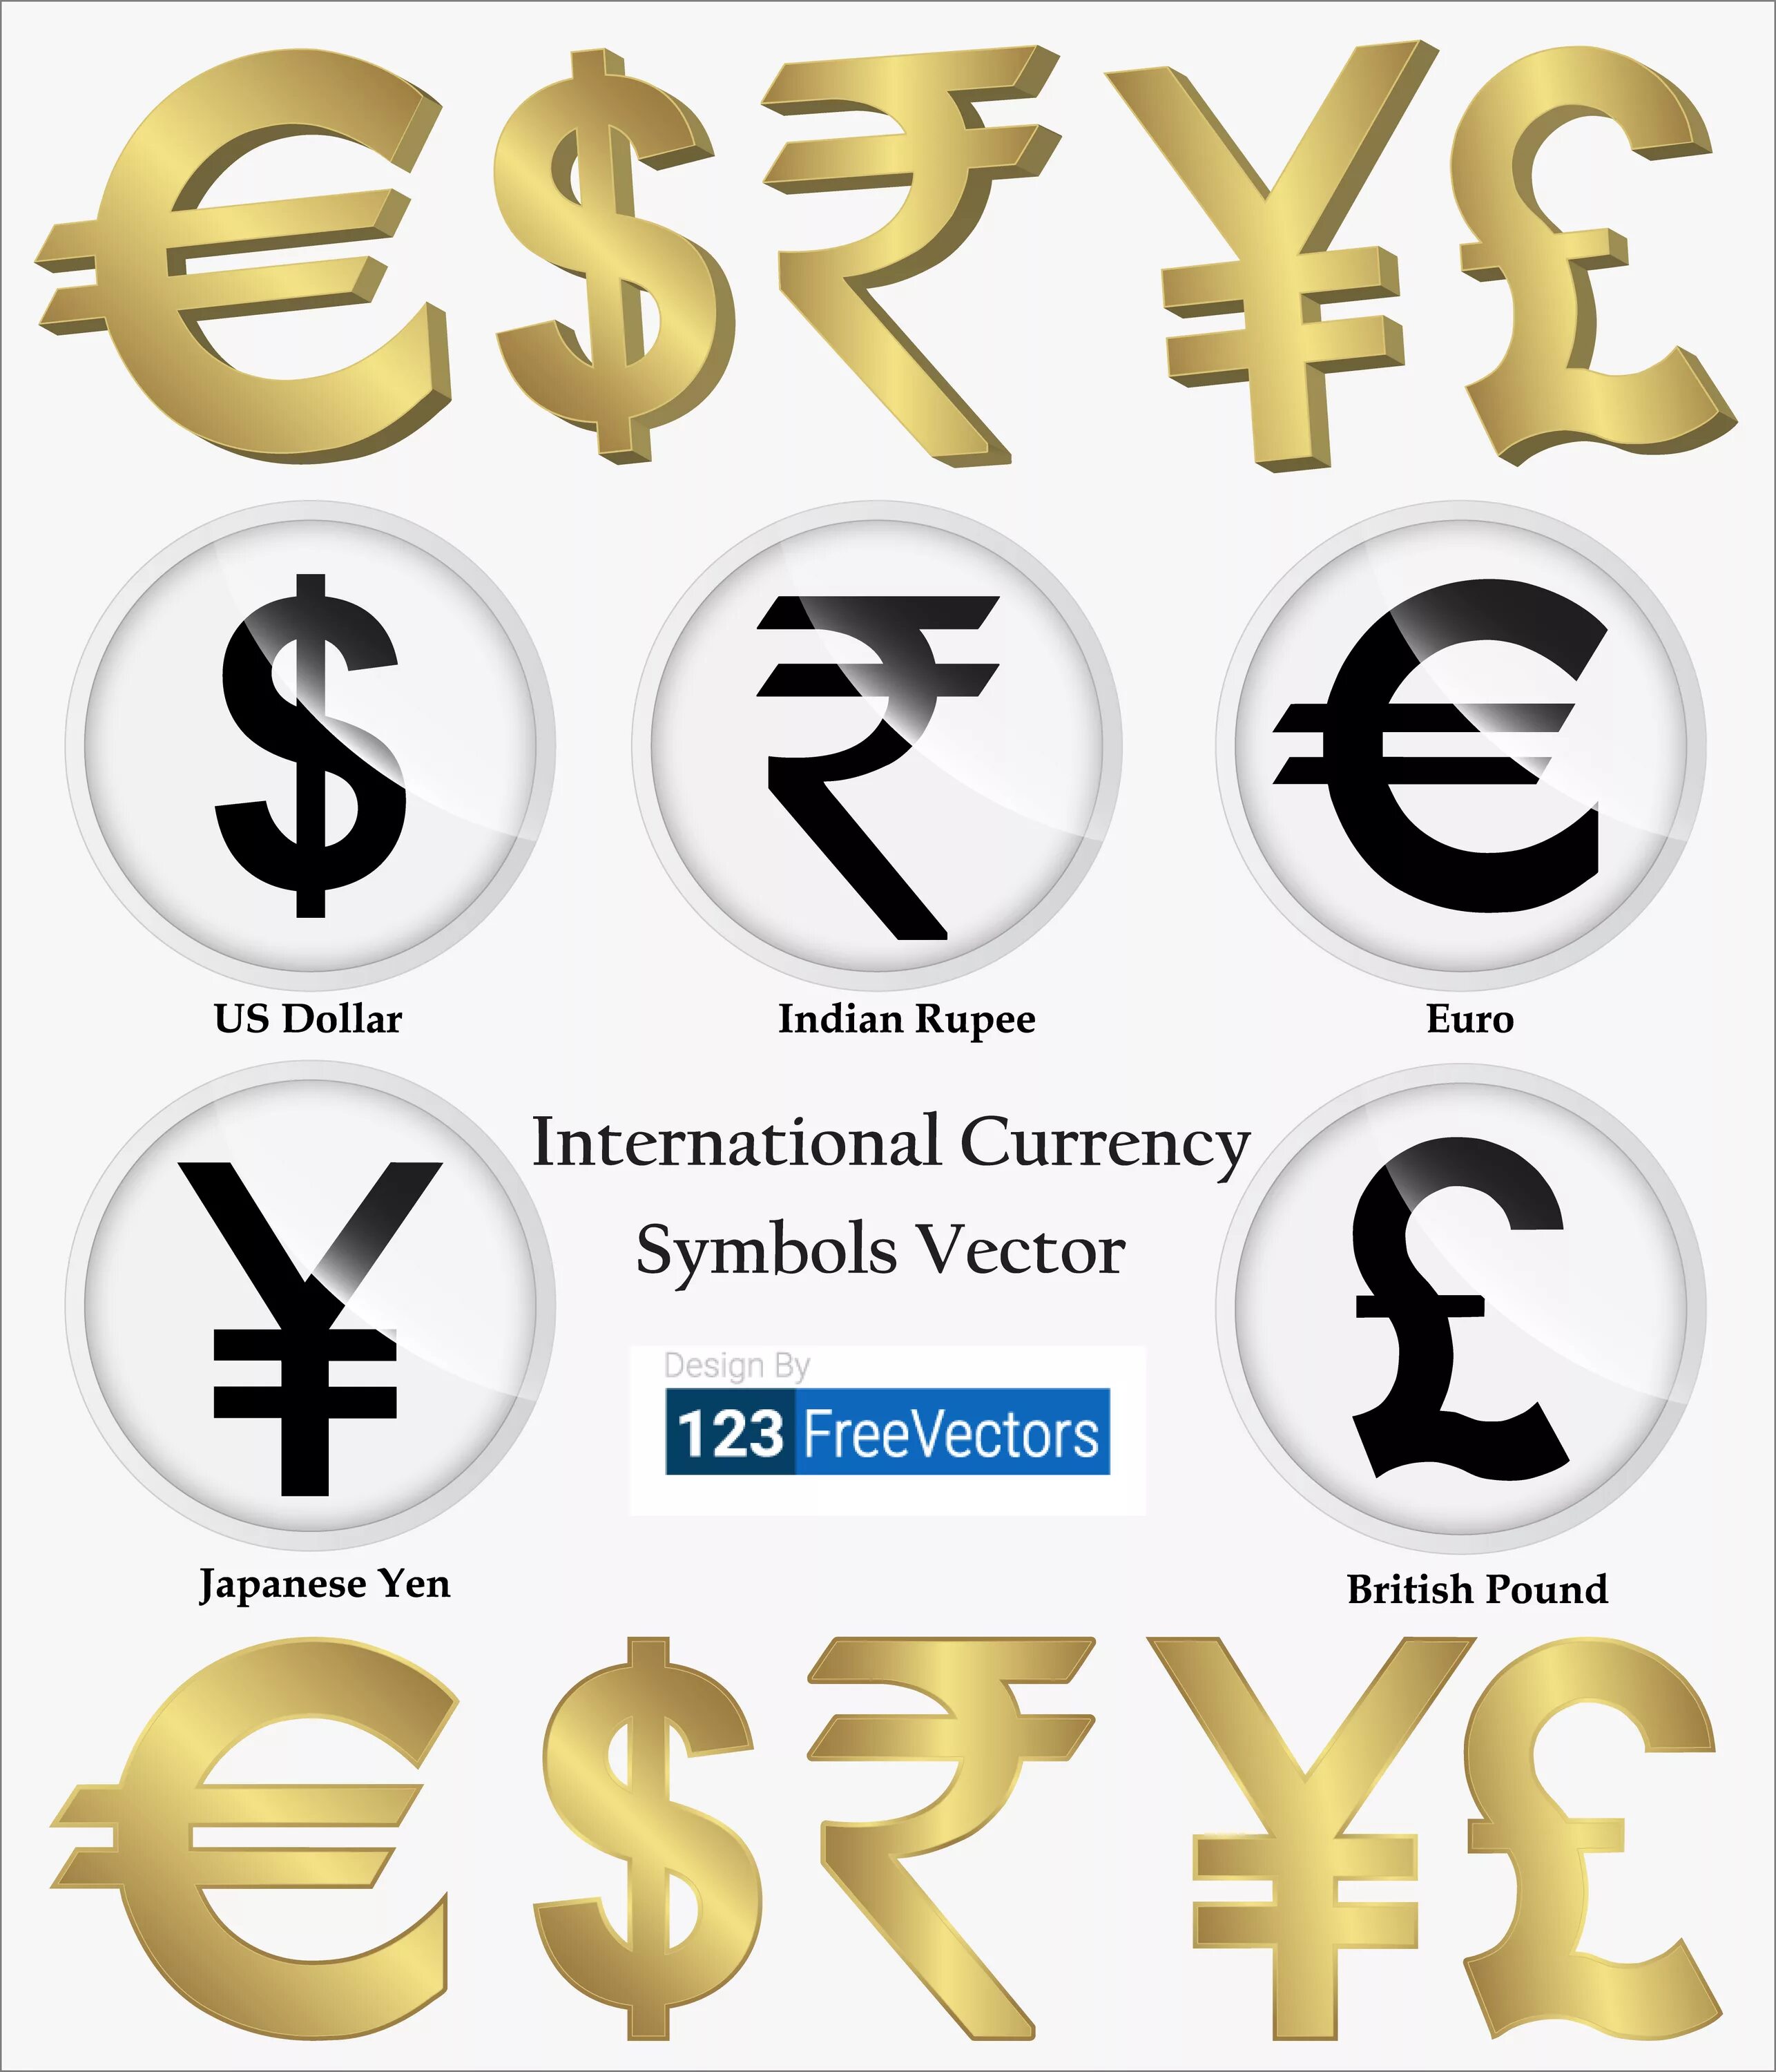 Currency types. Значки валют. Валютные символы. Международное обозначение валют. Валюта обозначение значками.